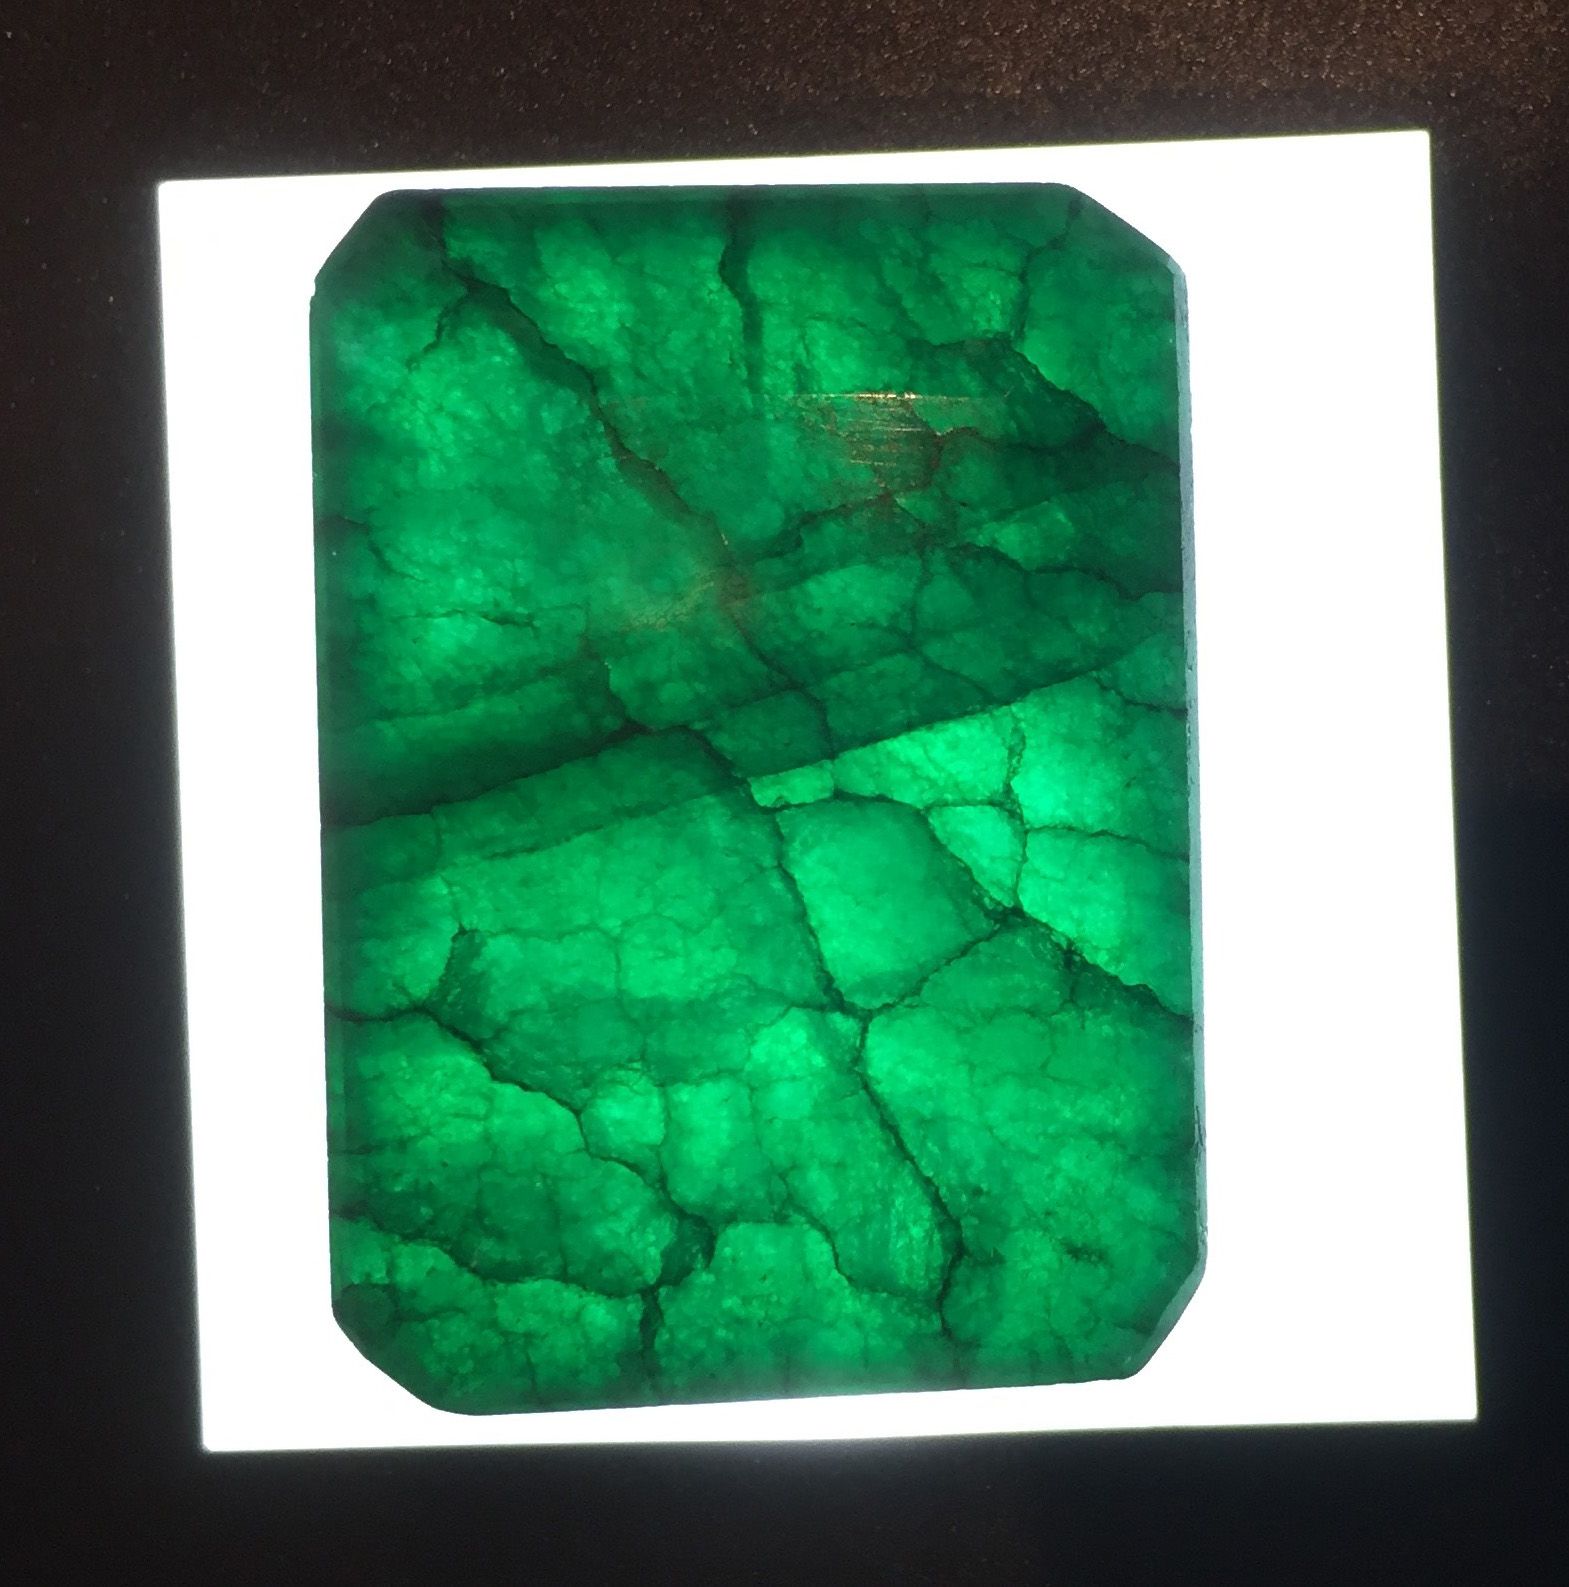 Dyed quartz imitating emerald